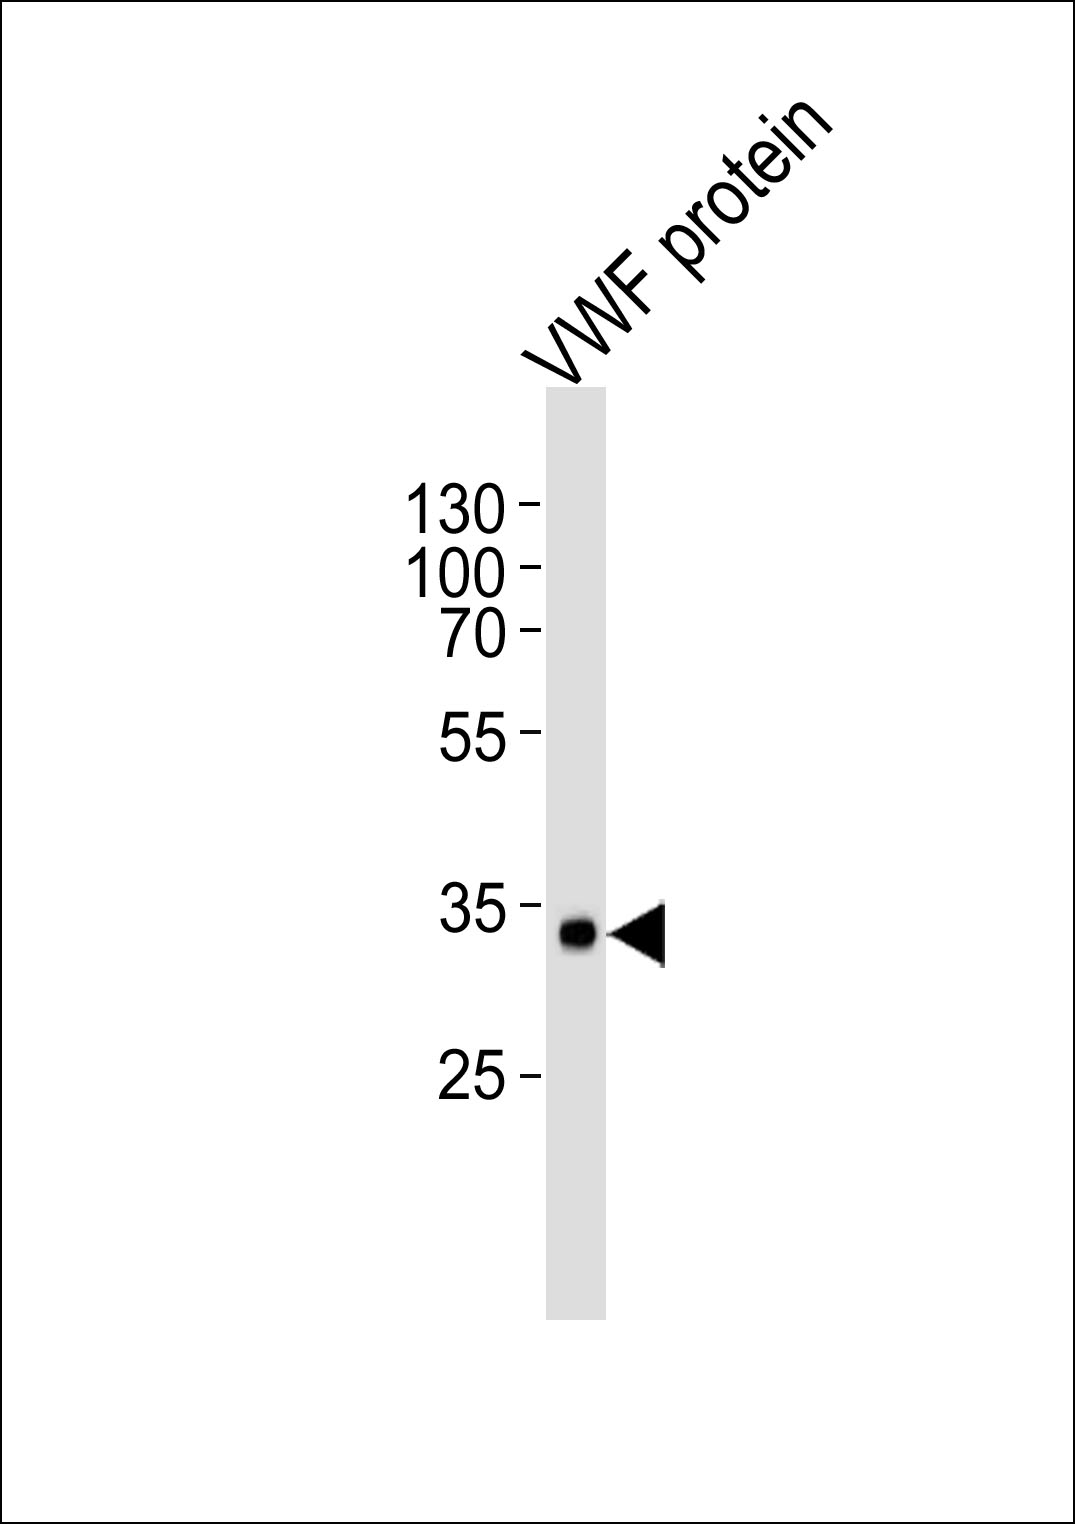 Mouse anti-VWF Monoclonal Antibody(907CT12.1.9)